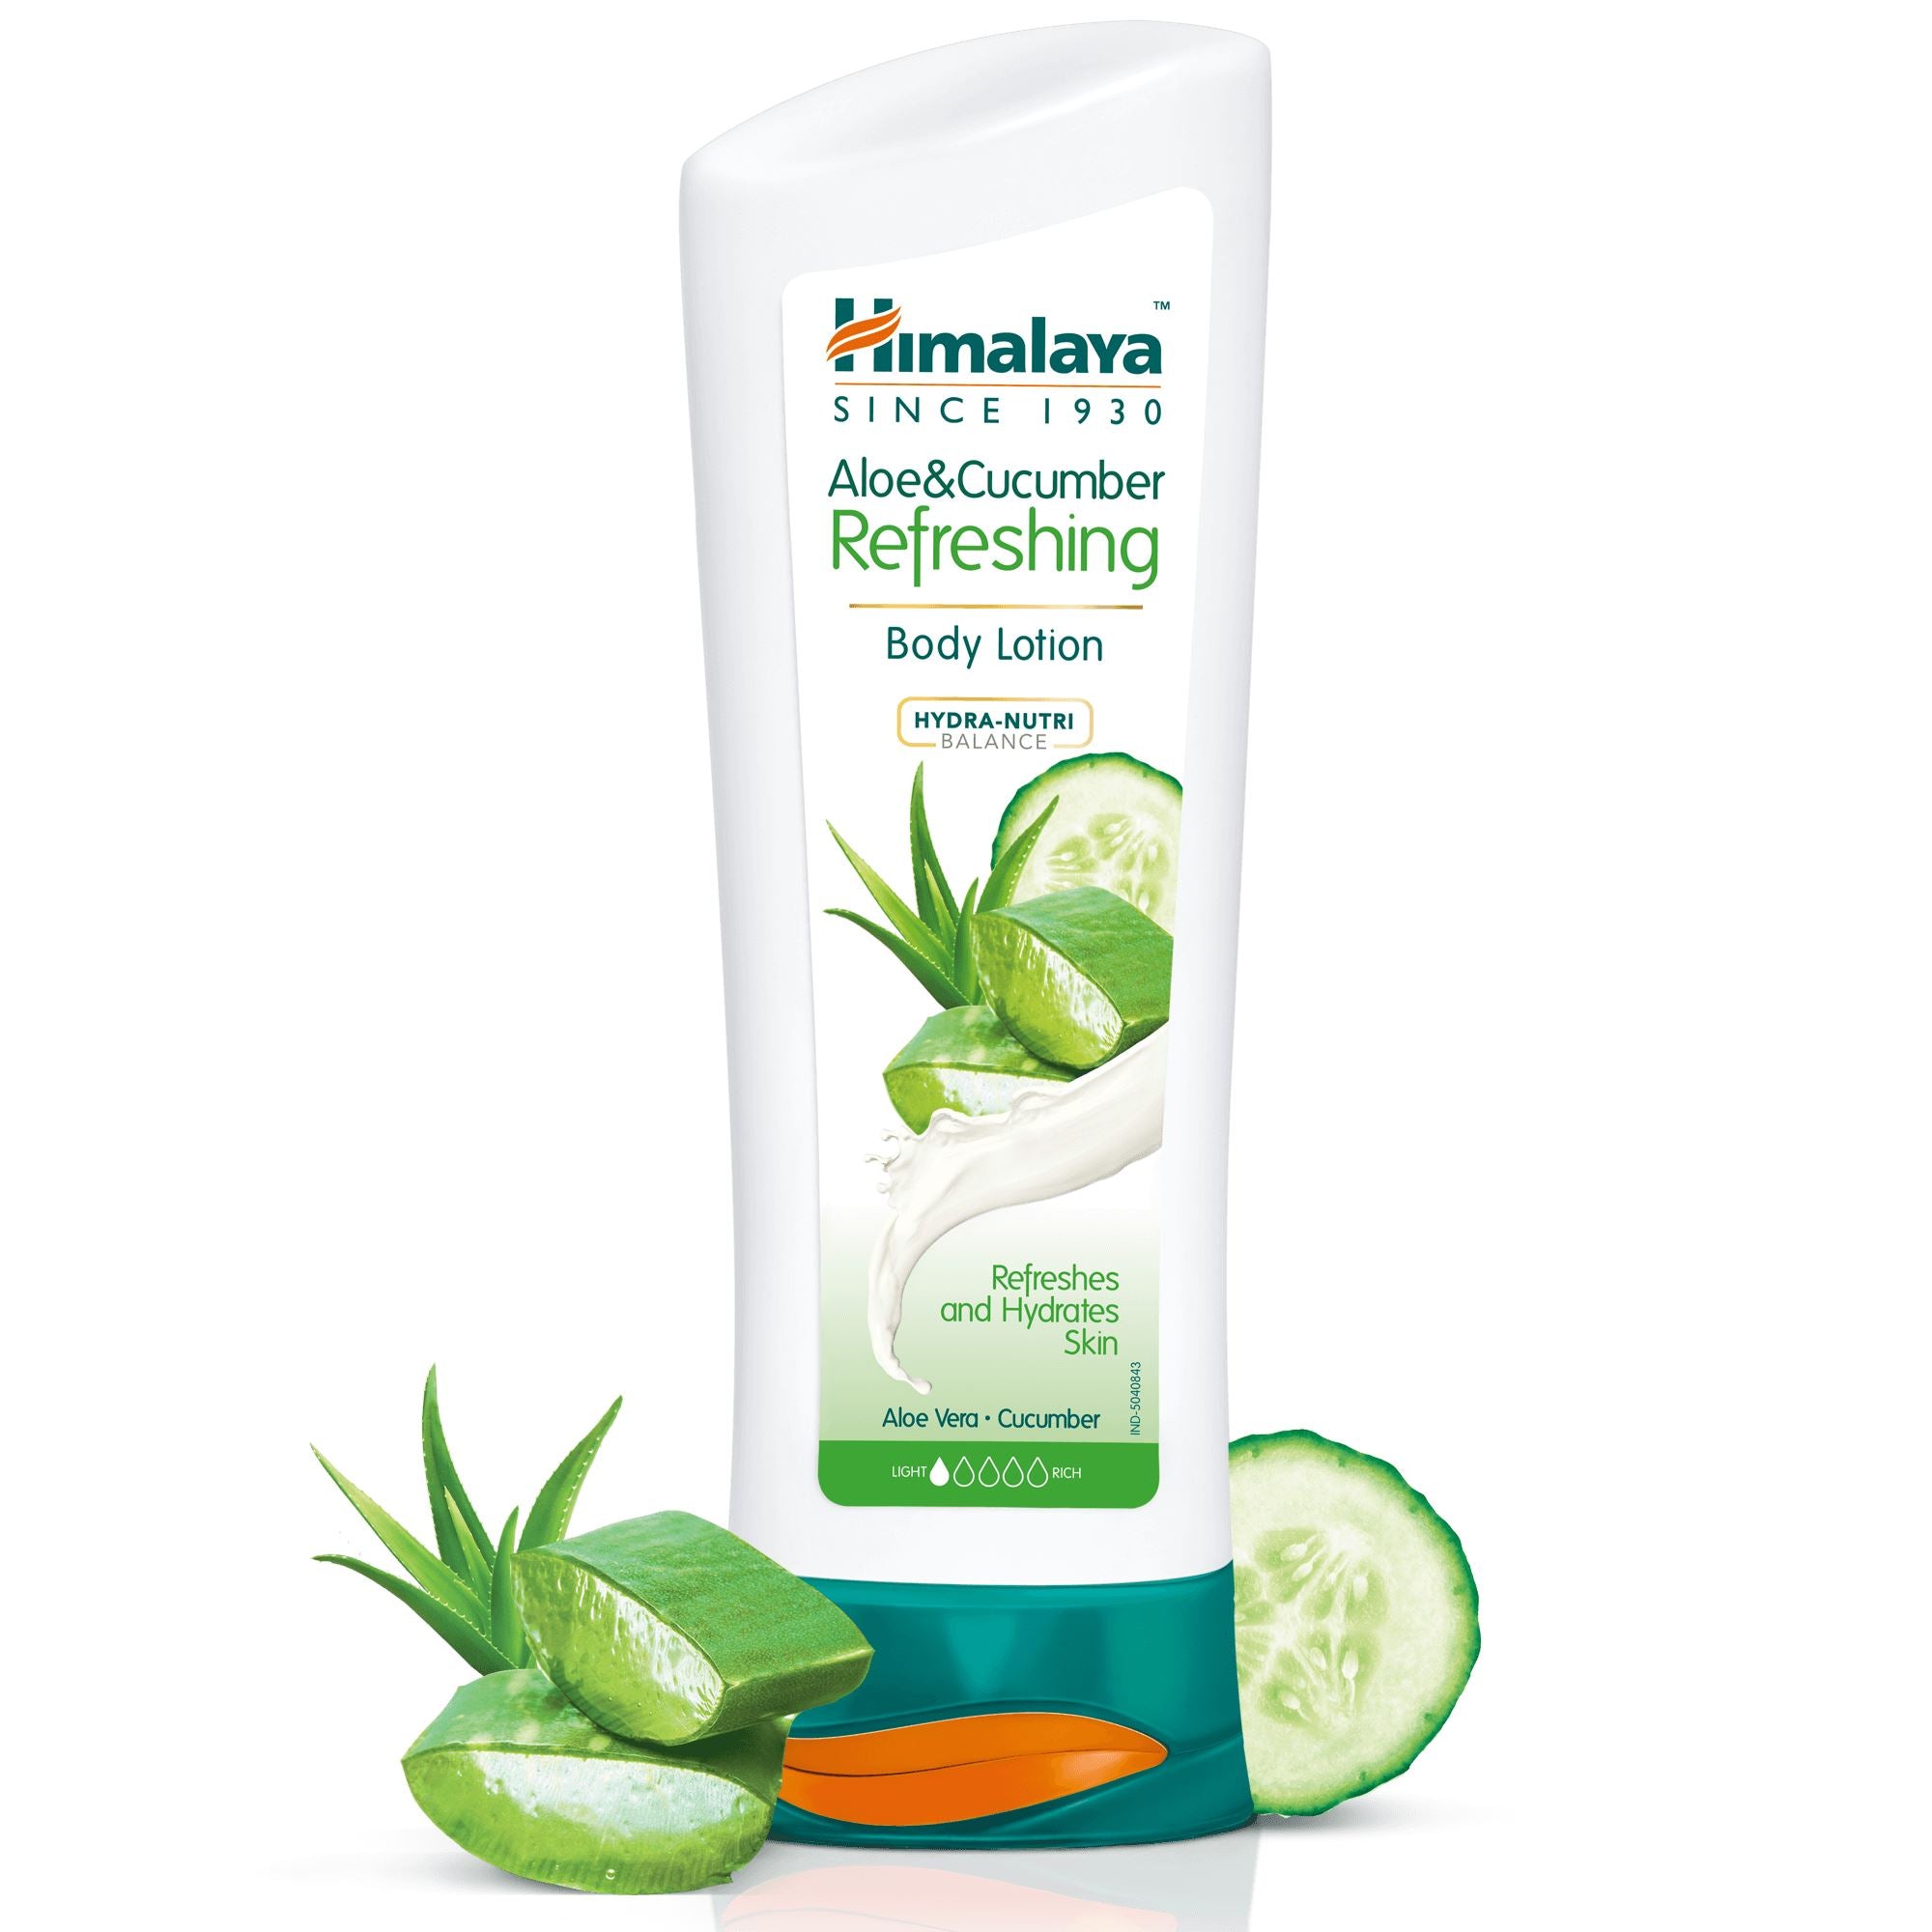 Himalaya Aloe & Cucumber Refreshing Body Lotion - Hydrates and refreshes skin 